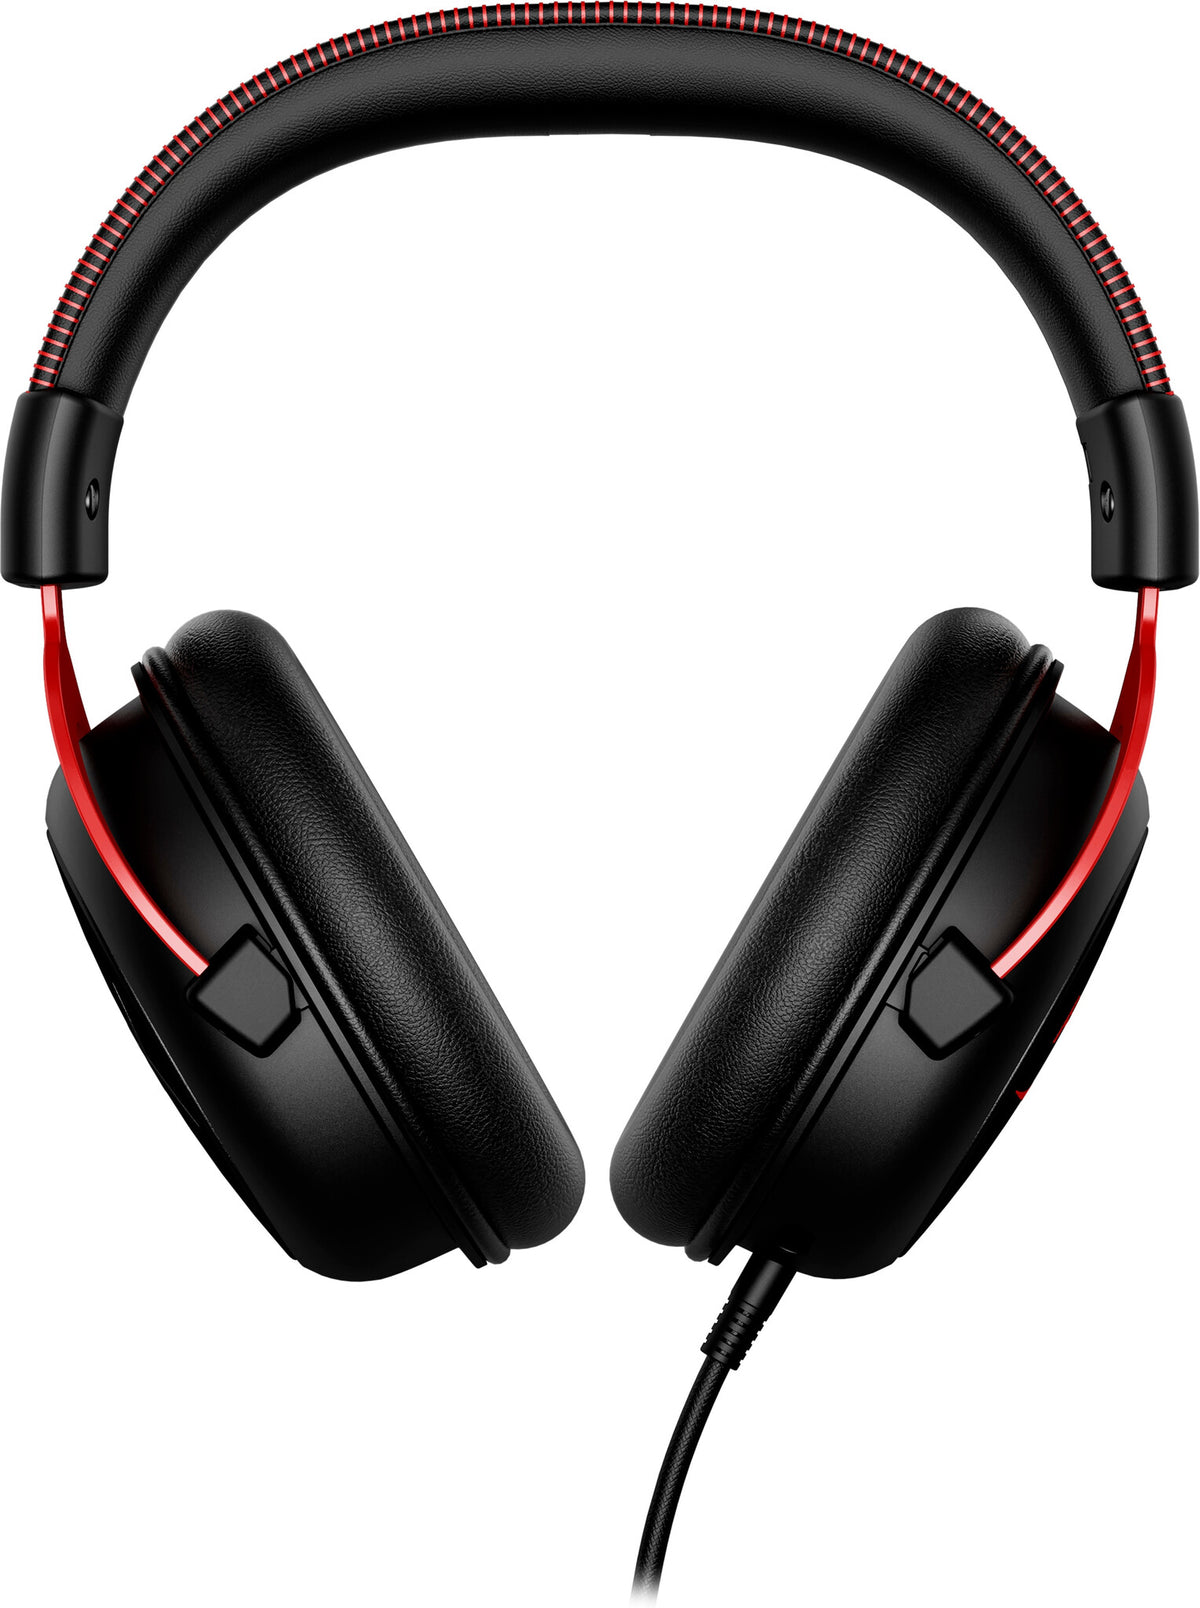 HyperX Cloud II - Wired Gaming Headset in Black / Red